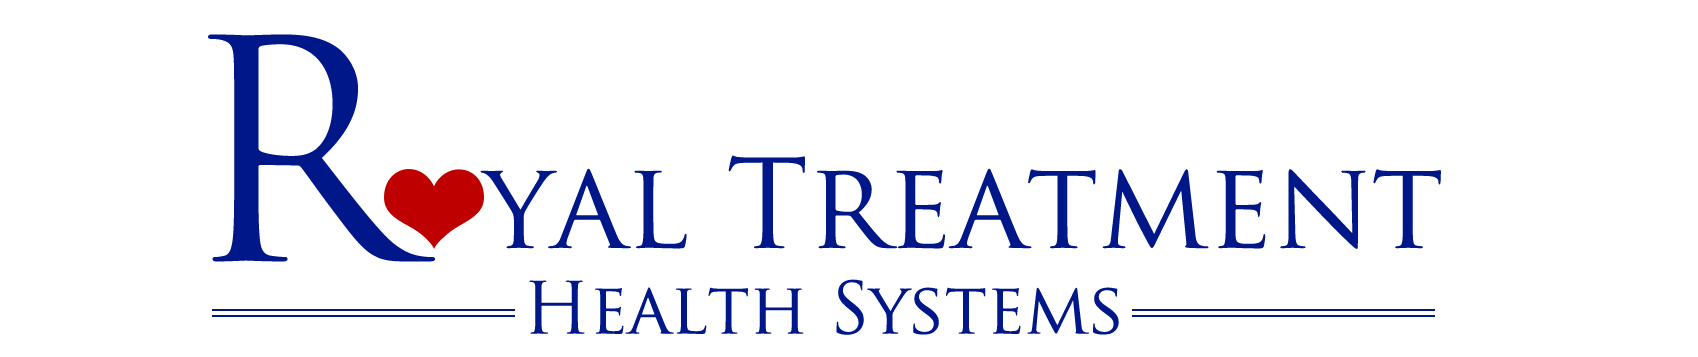 Royal Treatment Health Systems